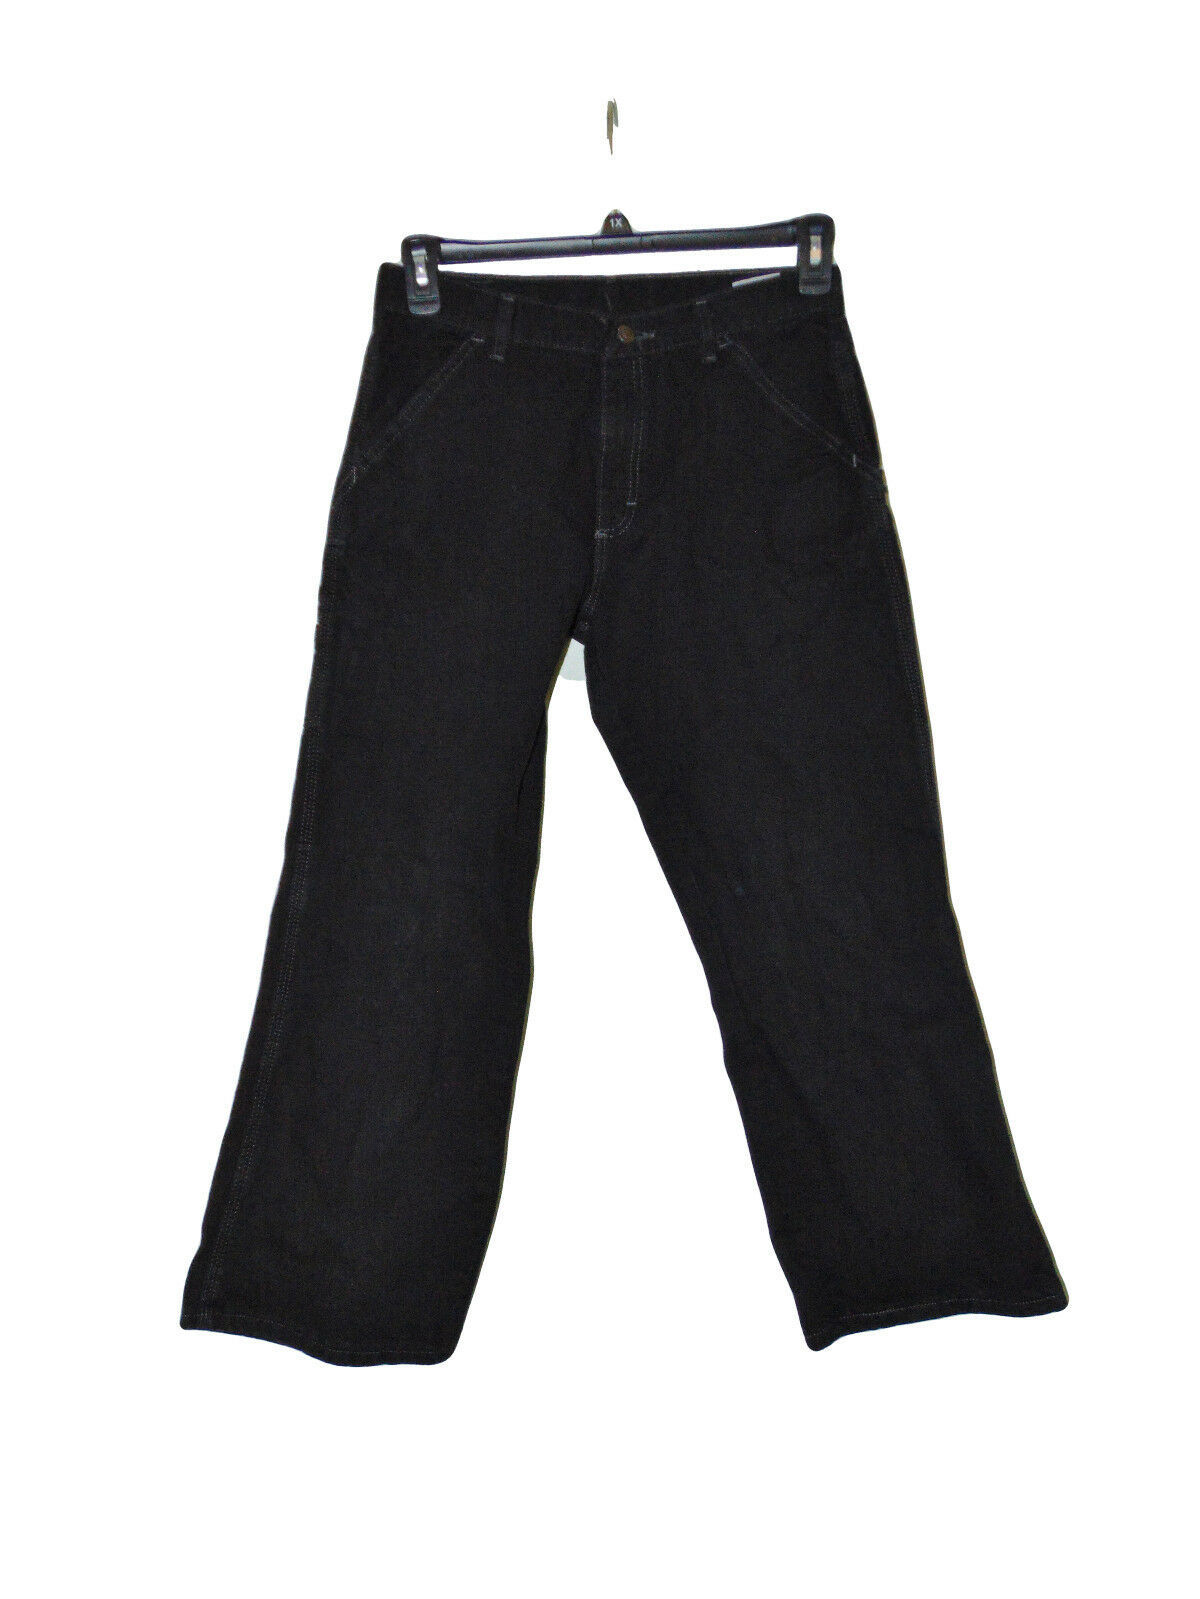 Wrangler Black Carpenter Jeans Size 14 Husky PreOwned - Jeans